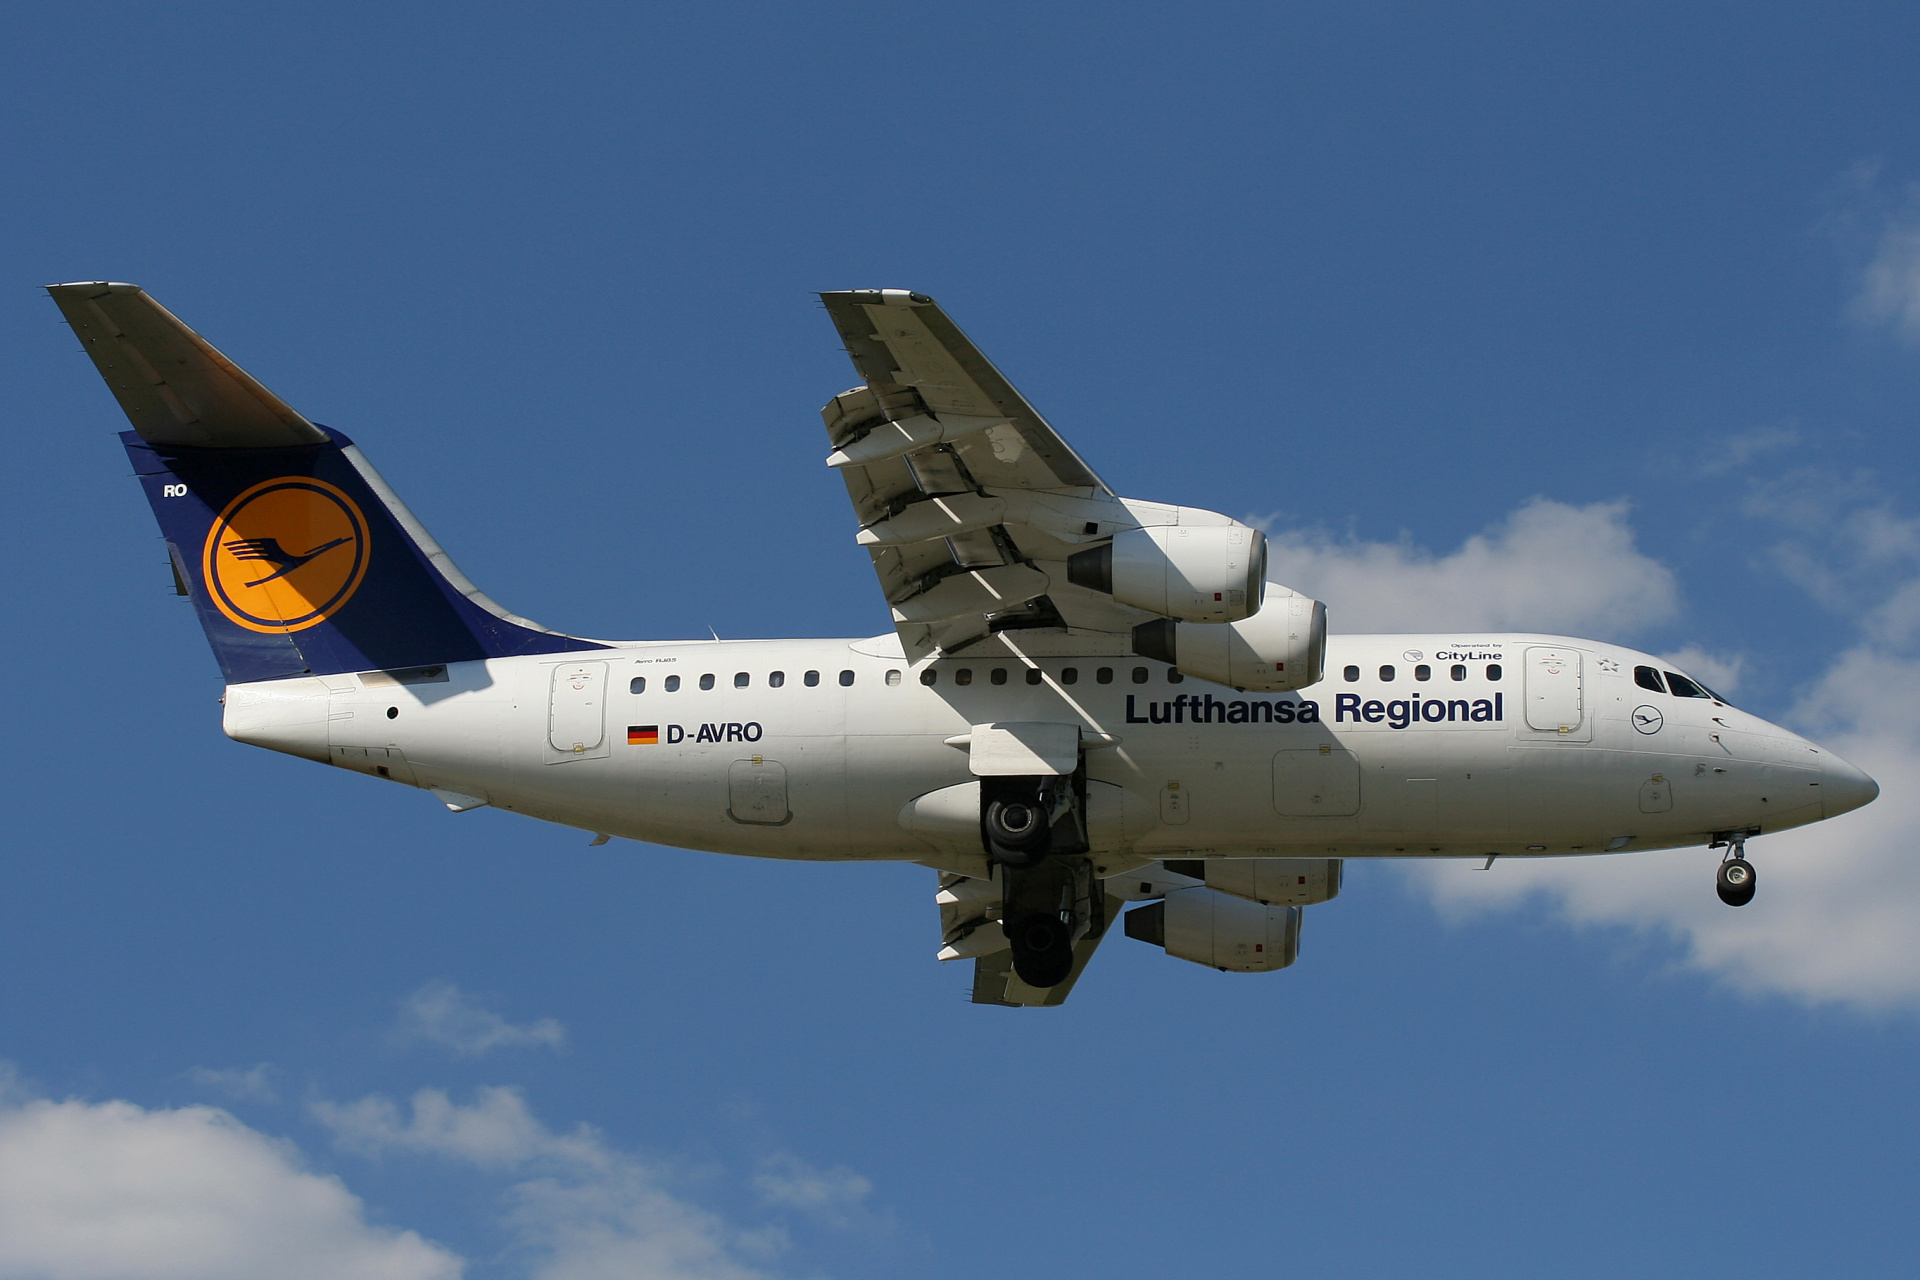 D-AVRO (CityLine) (Aircraft » EPWA Spotting » BAe 146 and revisions » Avro RJ85 » Lufthansa Regional)